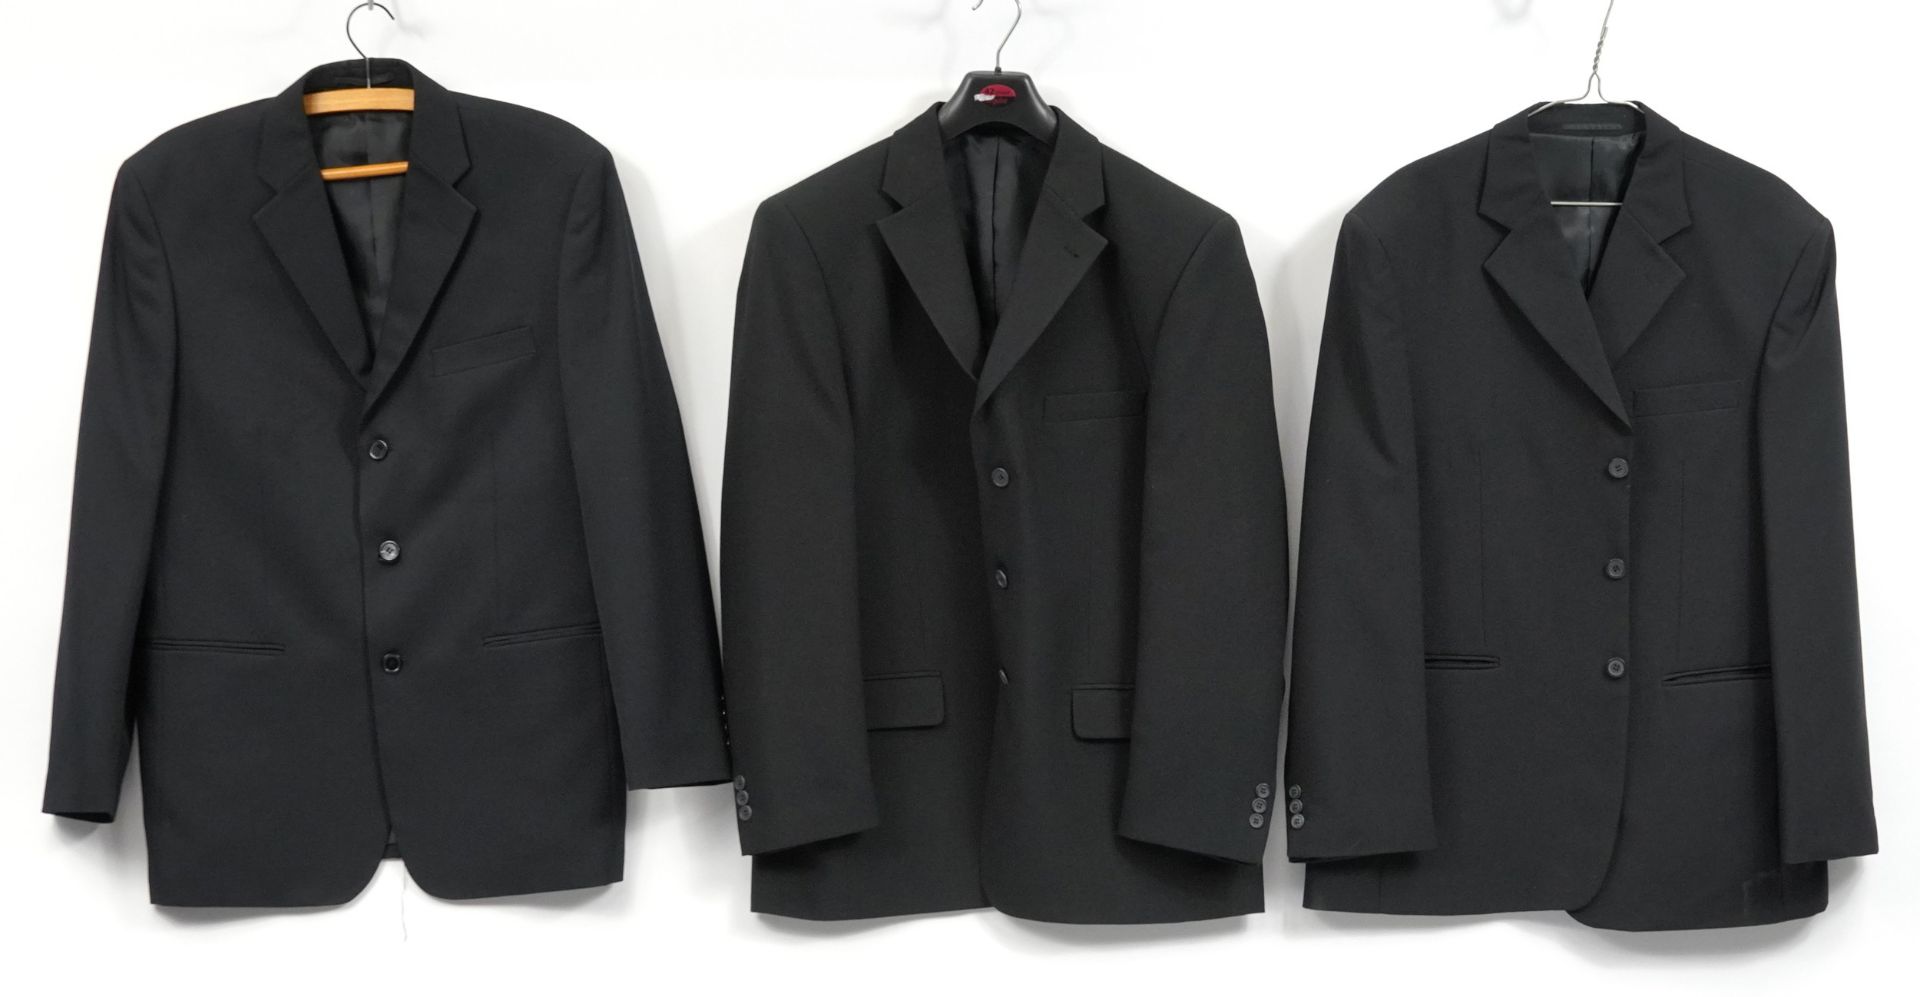 Three large black gentlemans suit jackets